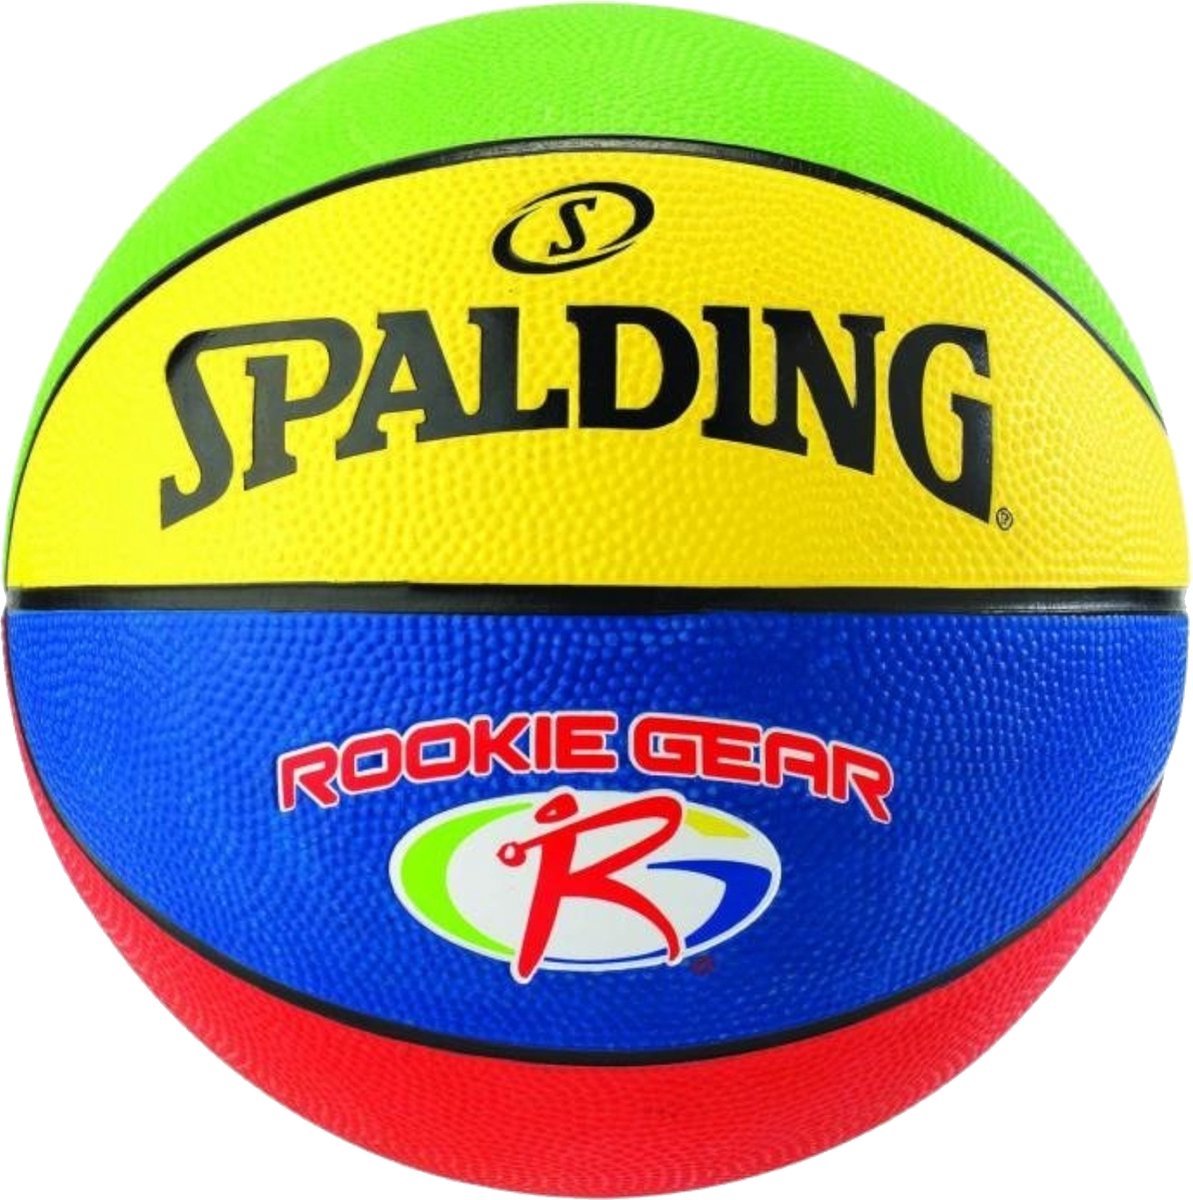 Spalding Rookie Gear Ball 84395Z, Unisex, Geel, basketbal, maat: 5